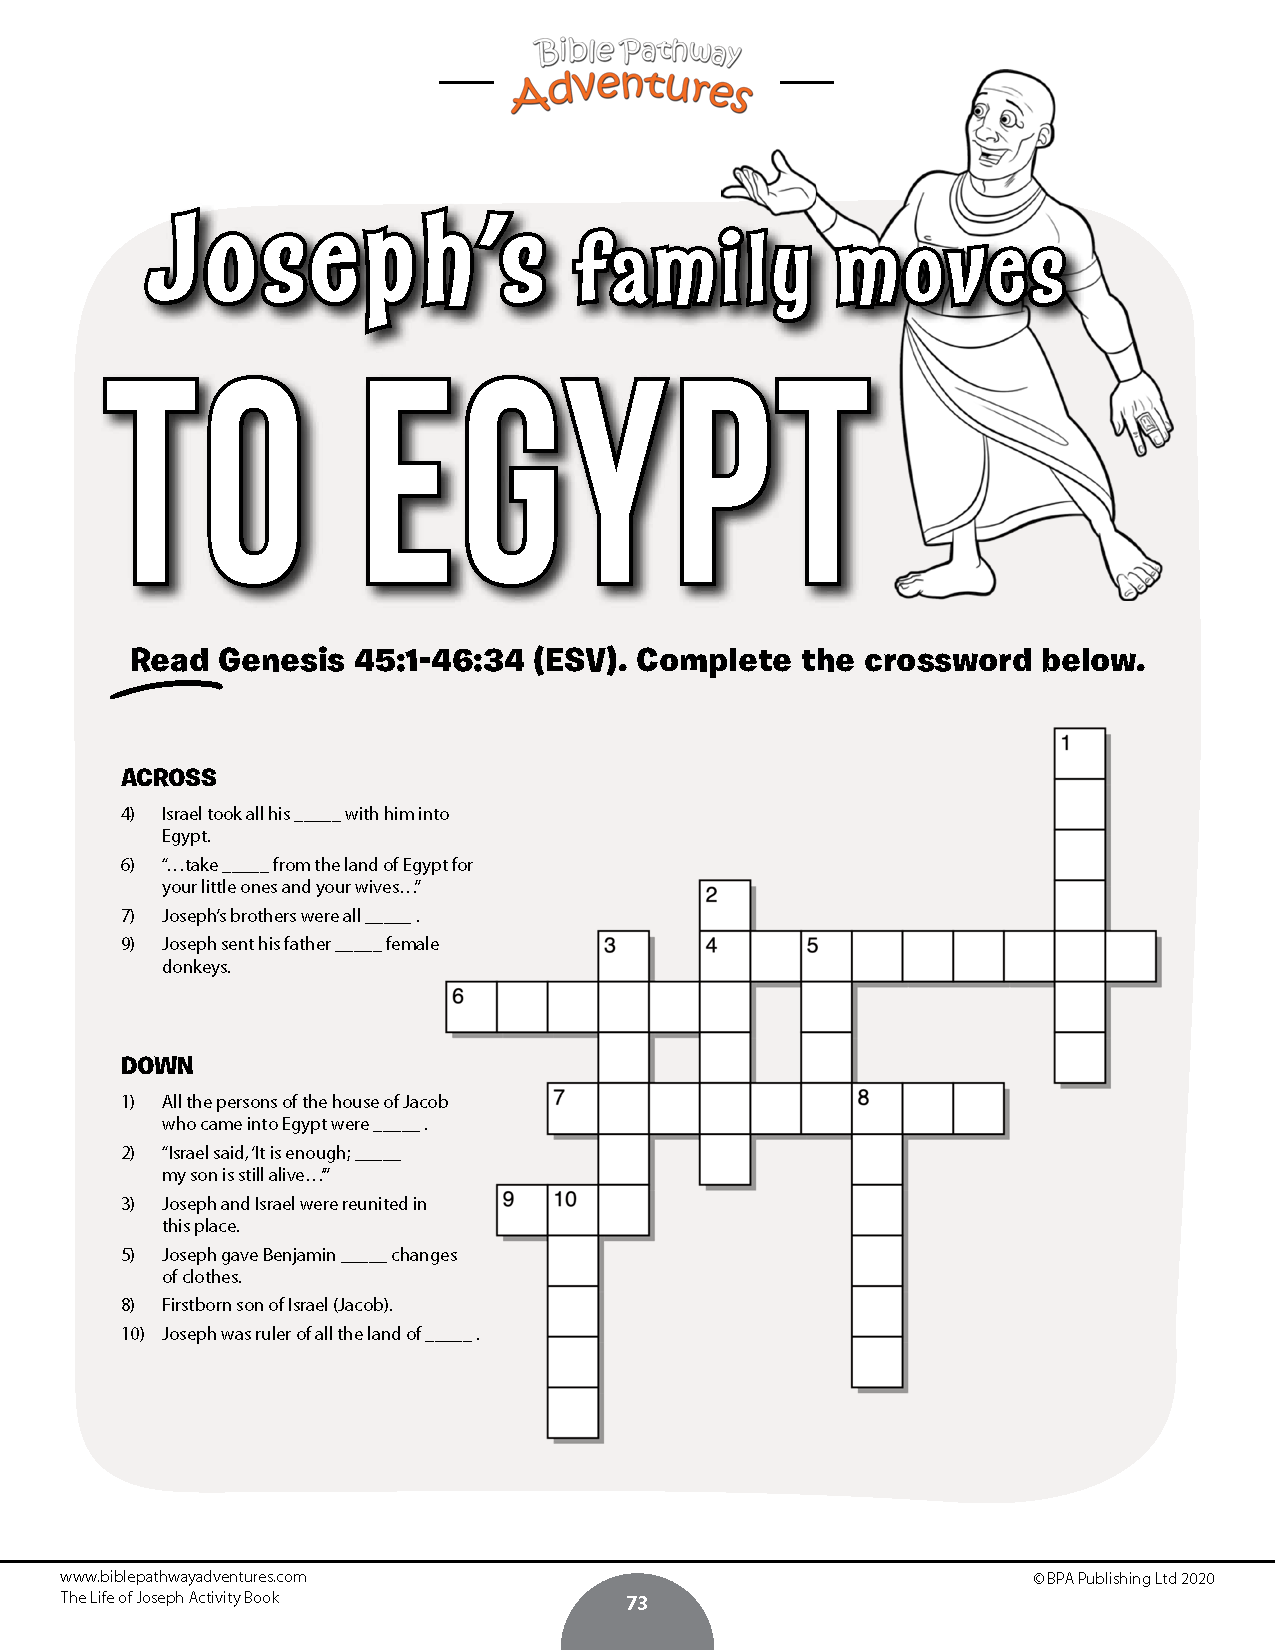 The Life of Joseph Activity Book (paperback)